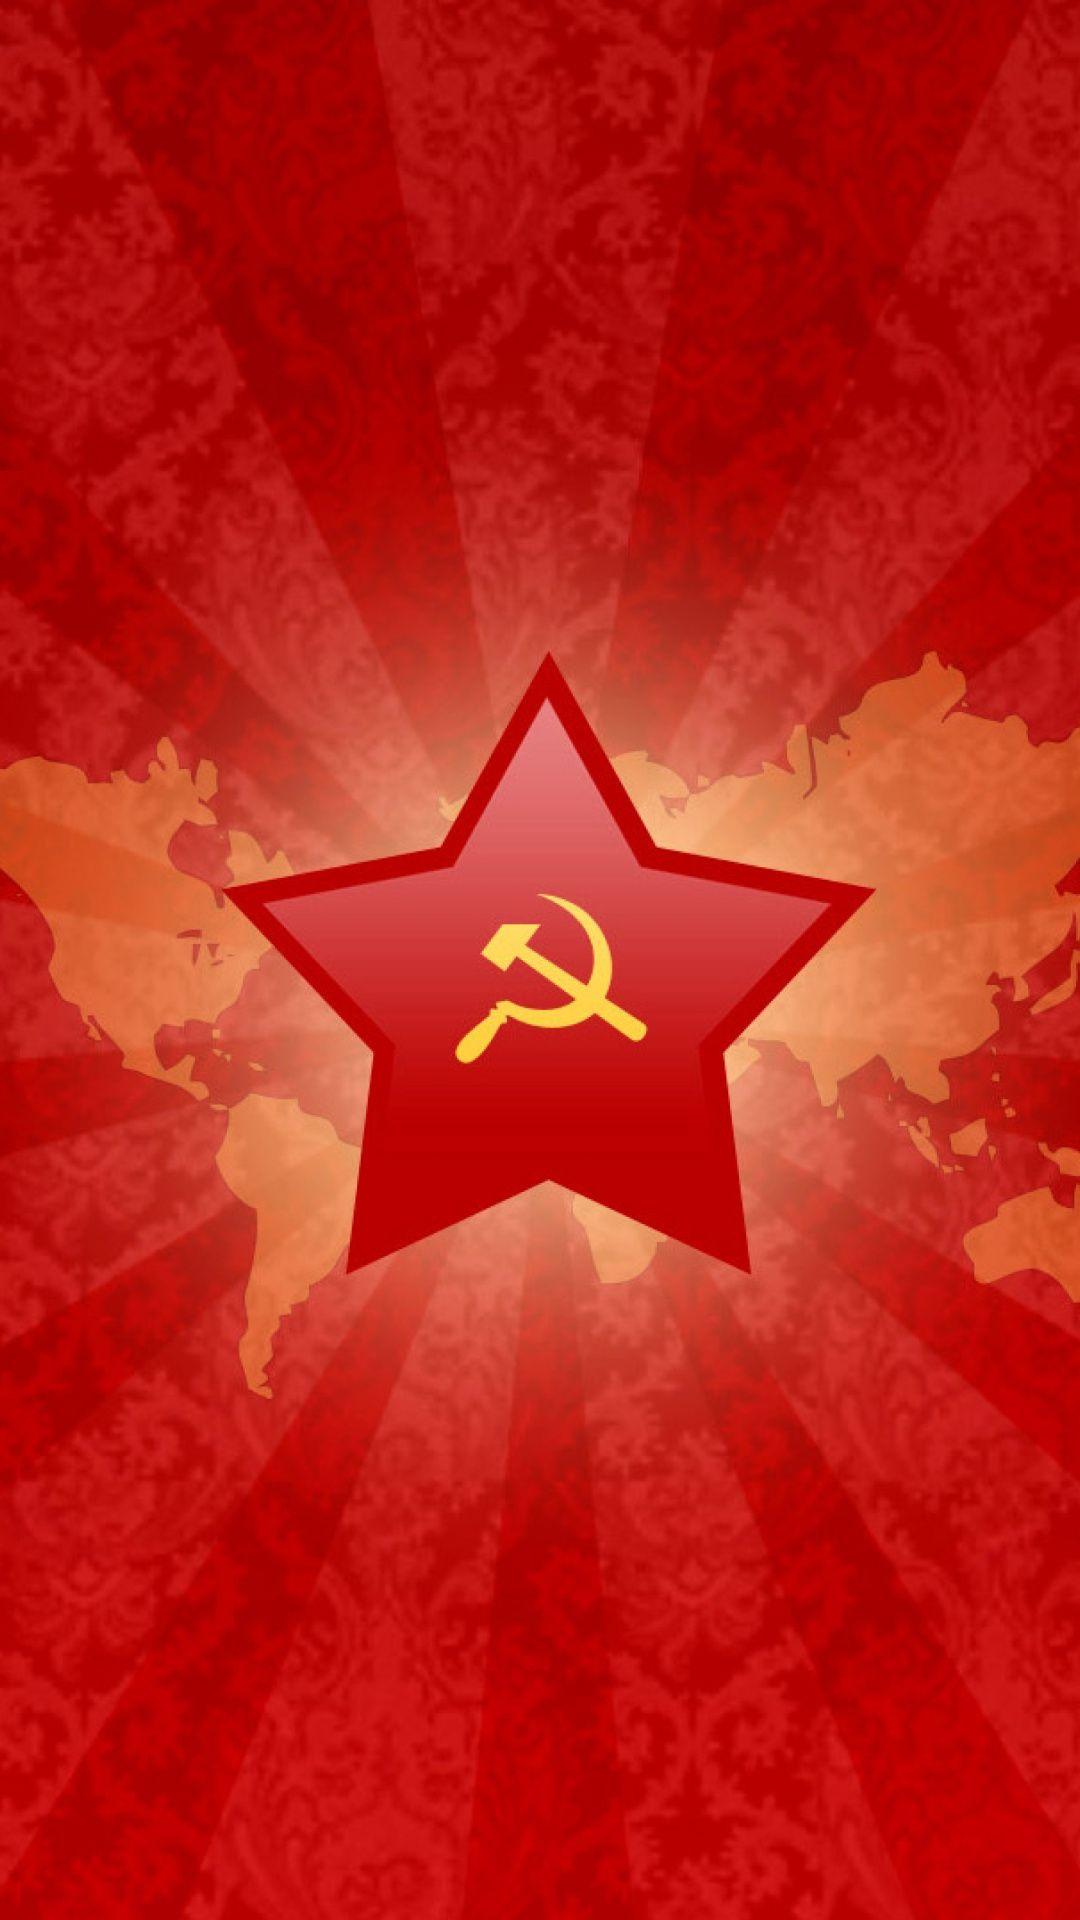 Soviet union logo 1080x1920 iphone wallpaper